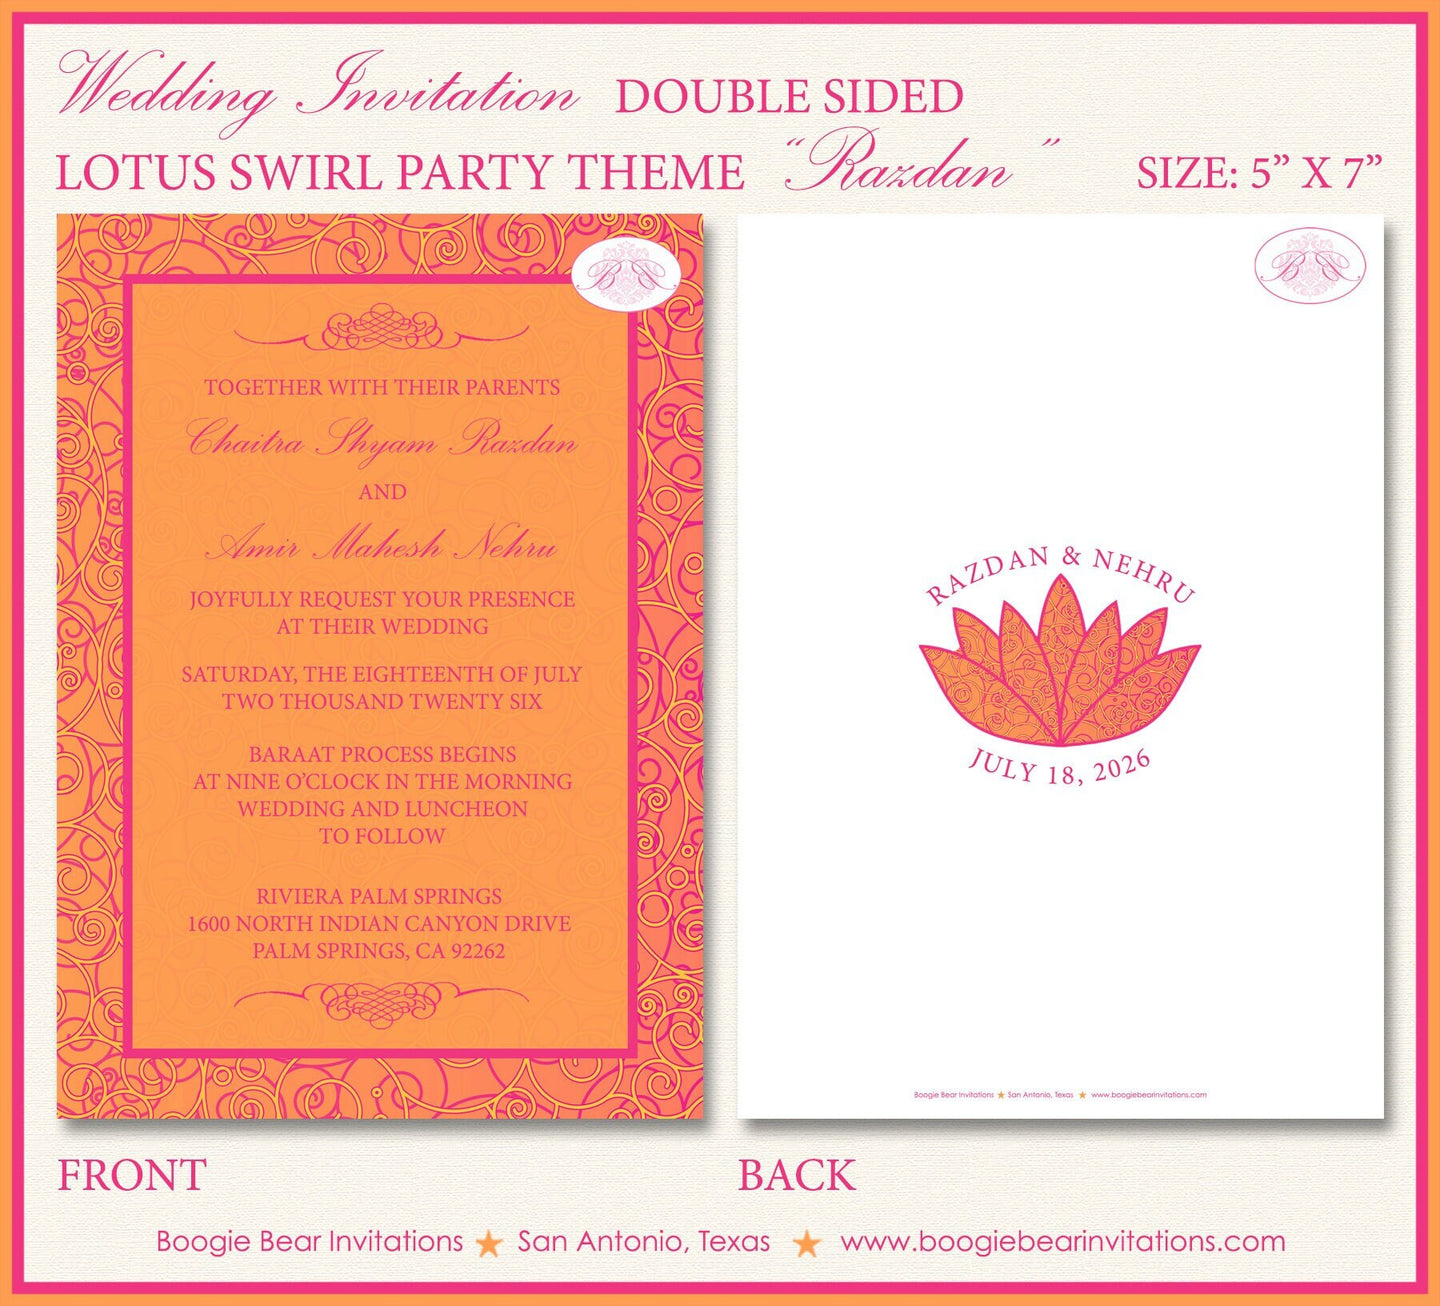 Lotus Swirl Wedding Invitation Birthday Party Flower Modern Pink Orange Boogie Bear Invitations Razdan Theme Paperless Printable Printed